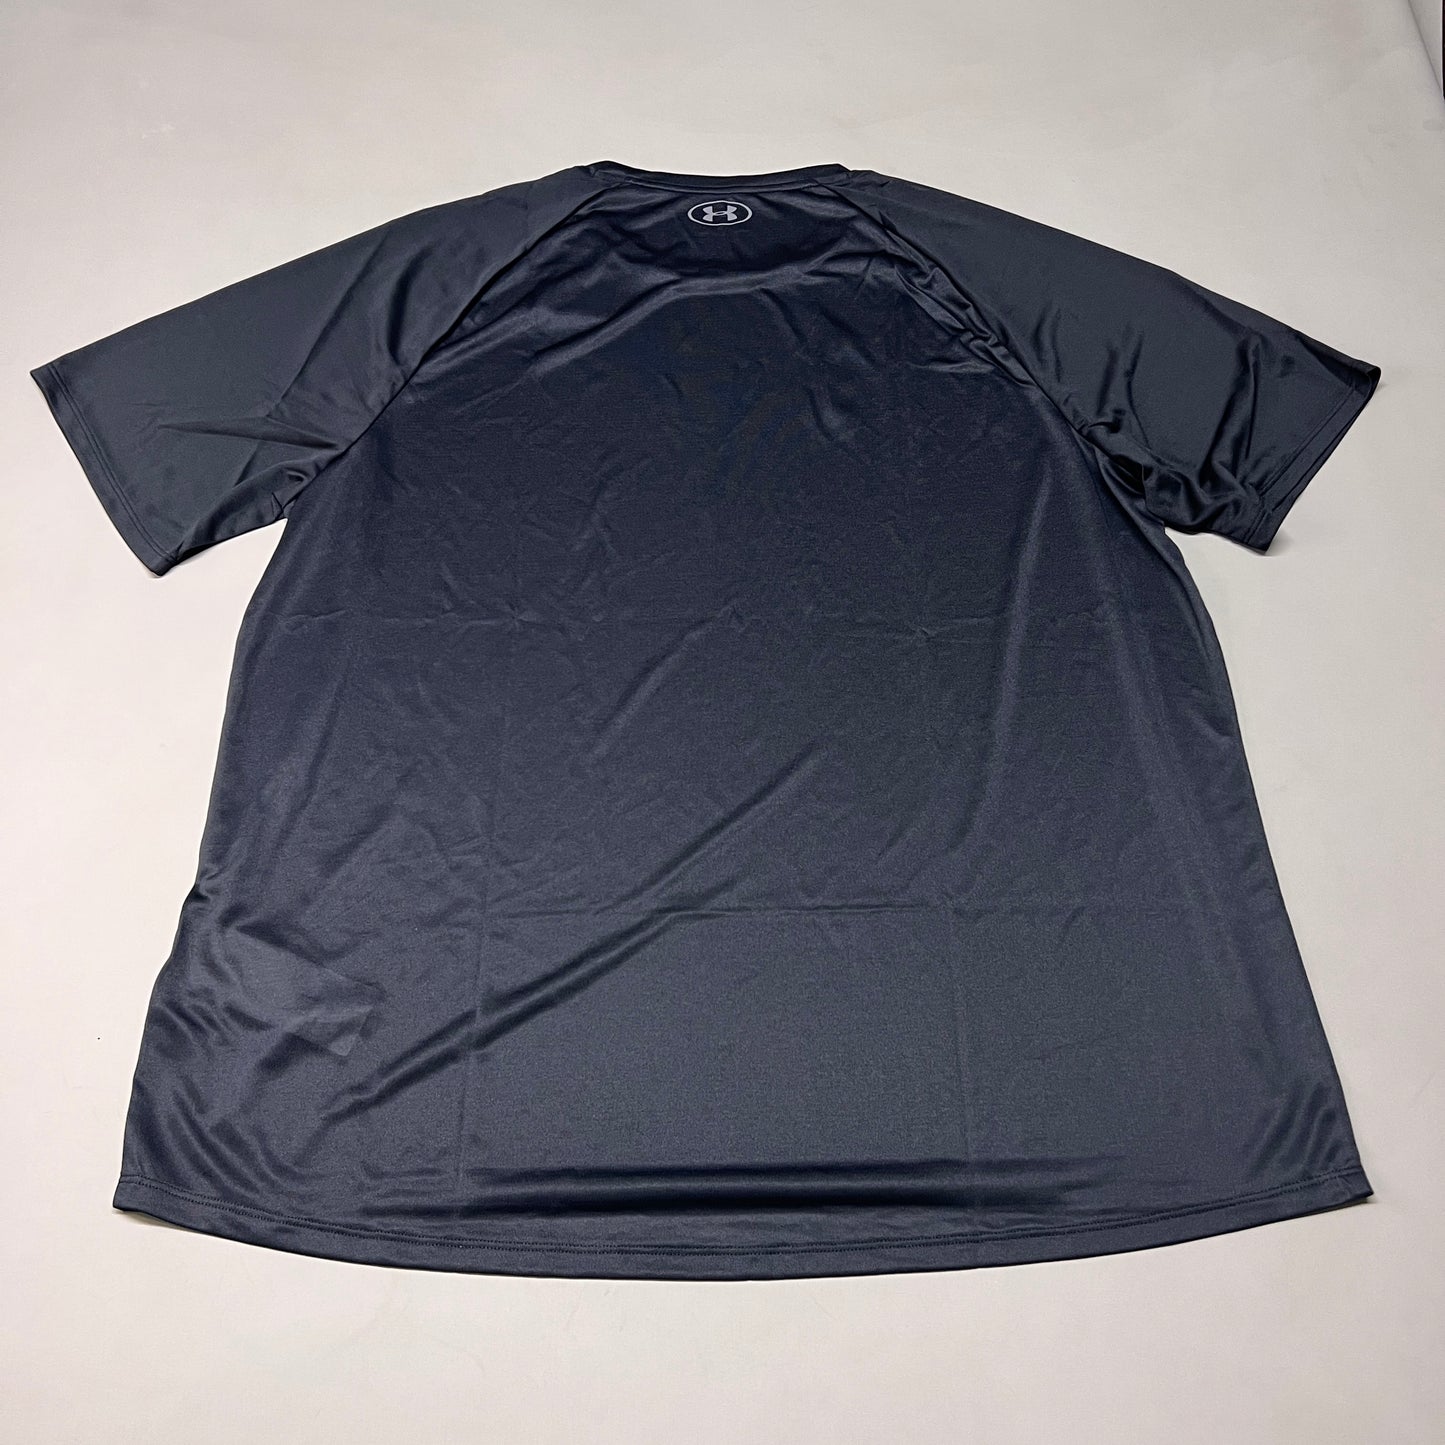 UNDER ARMOUR Tech 2.0 Short Sleeve Tee Men's Black / Graphite-001 Sz 3XL 1326413 (New)